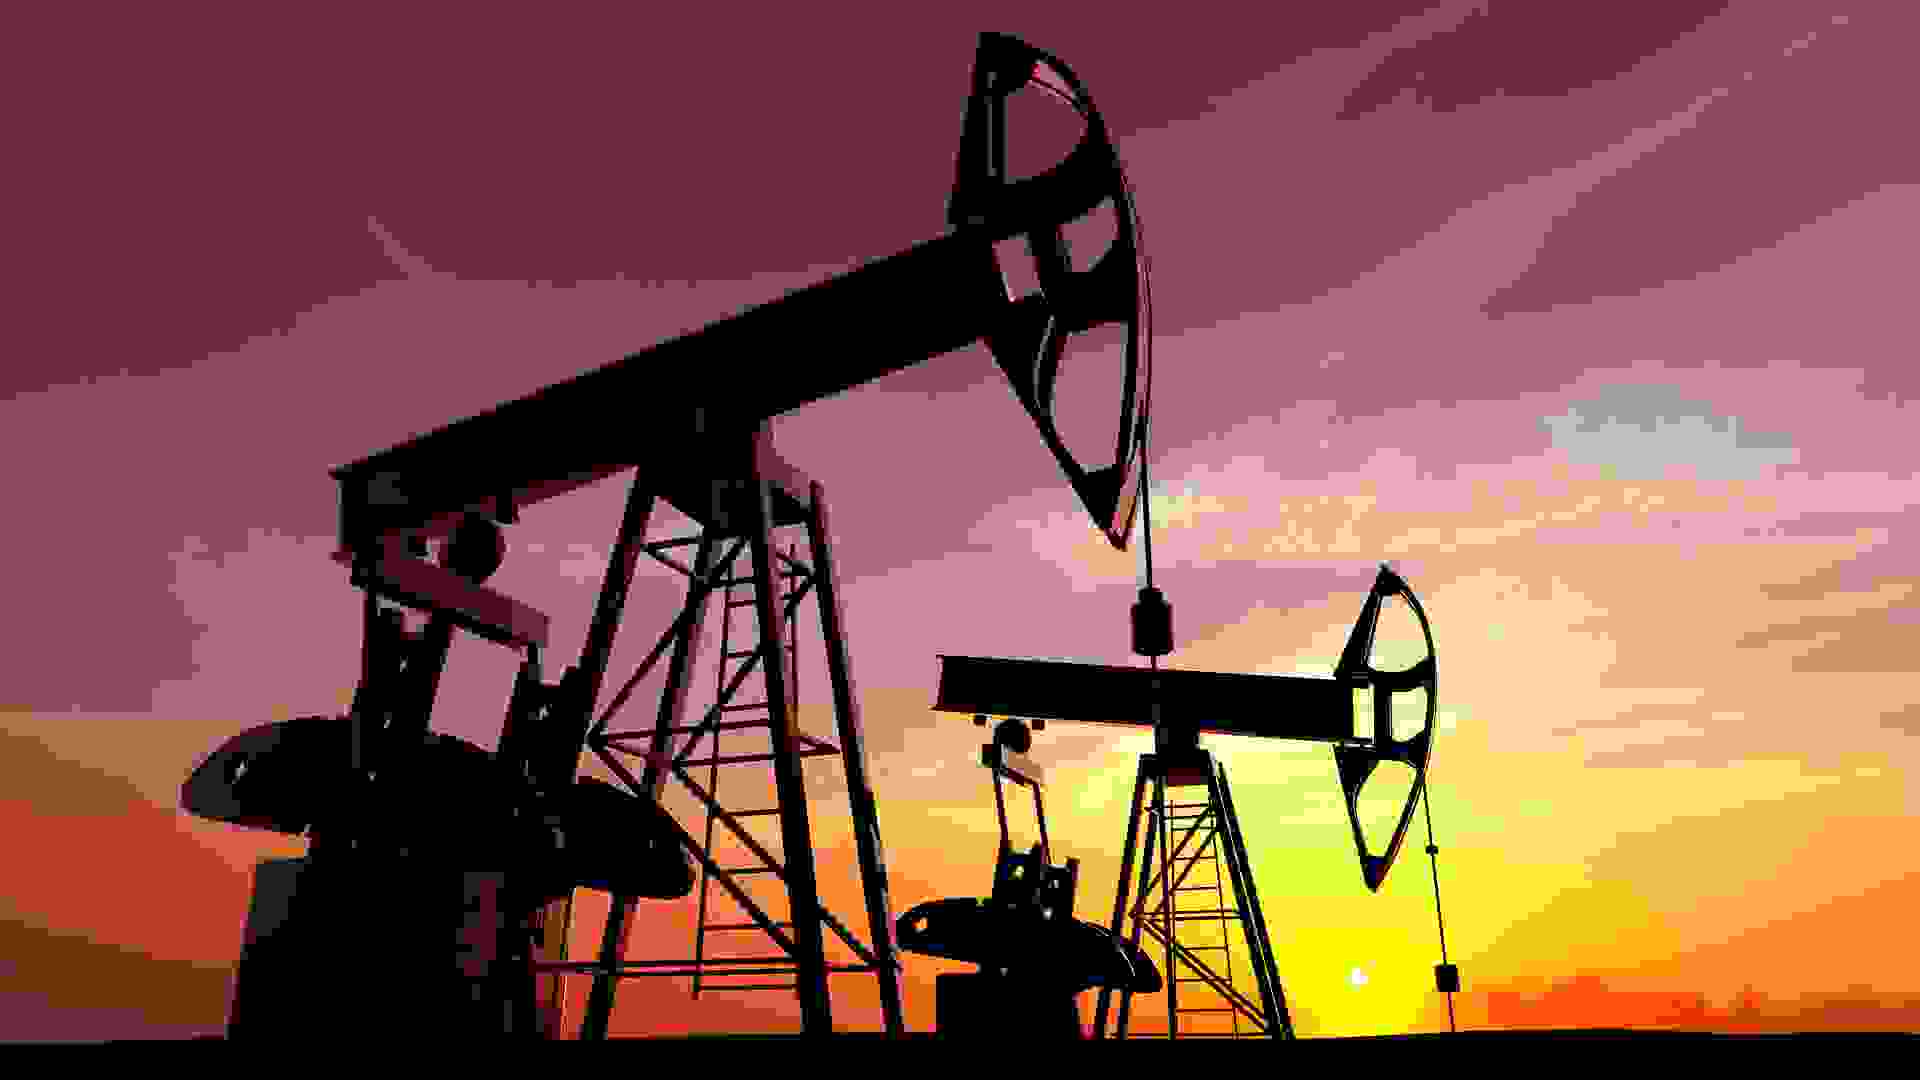 Oil pump against sunset sky